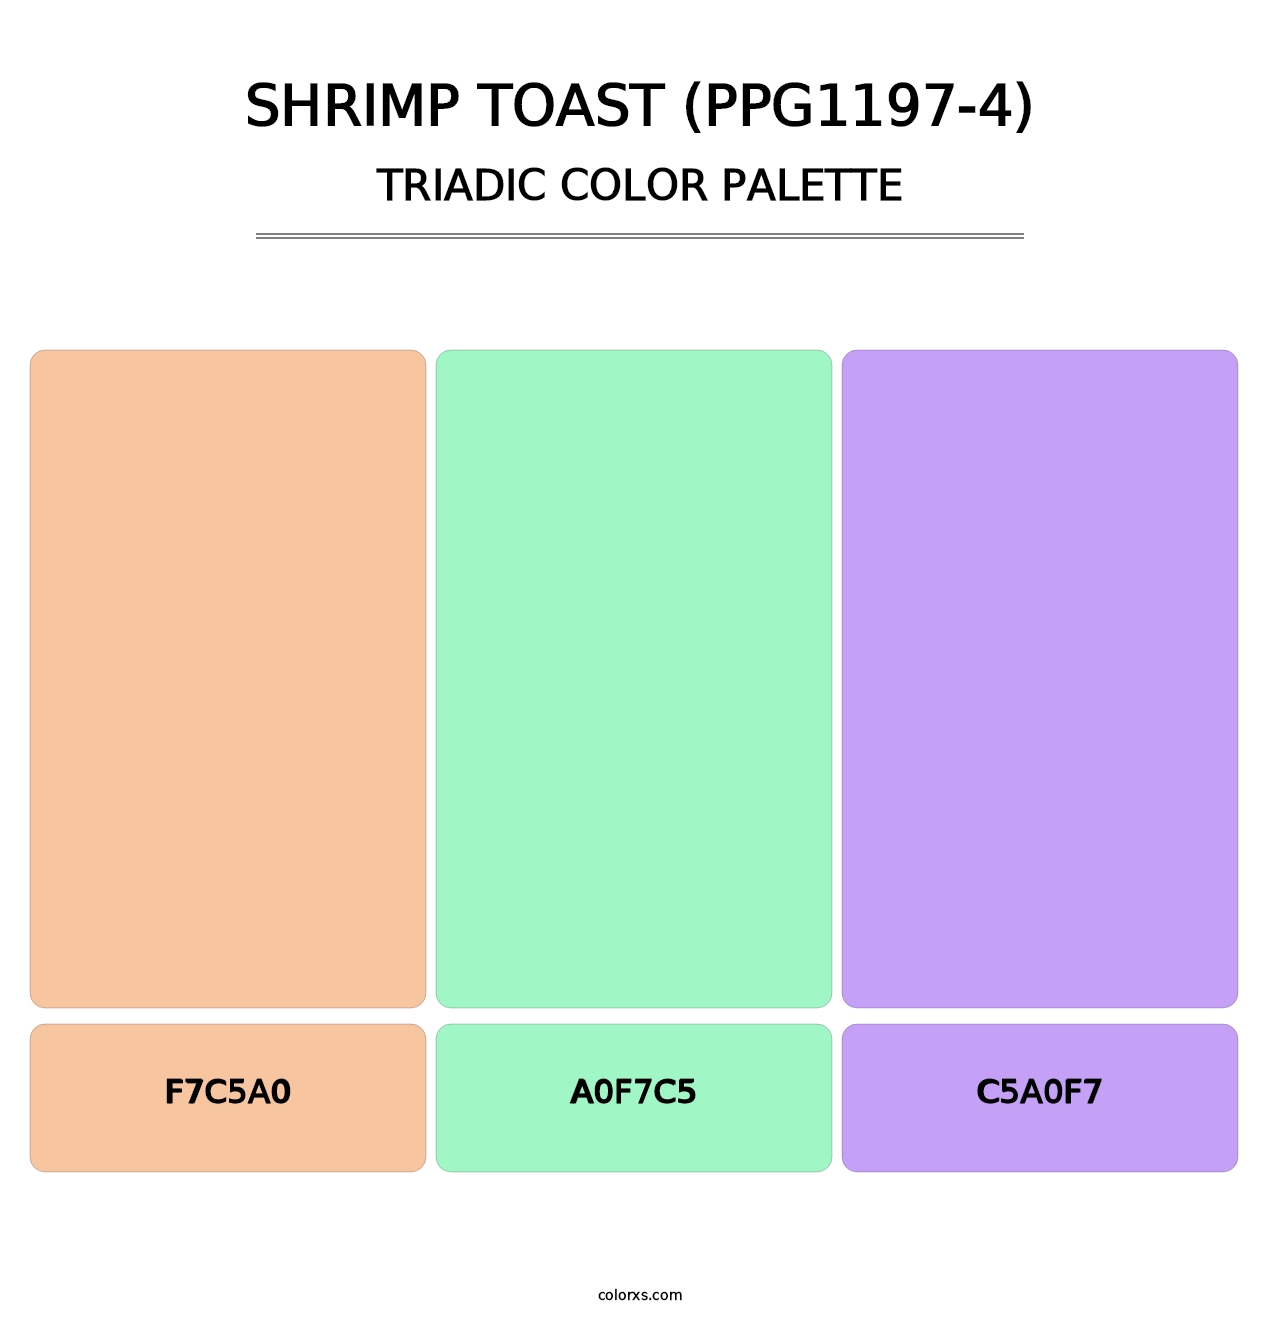 Shrimp Toast (PPG1197-4) - Triadic Color Palette